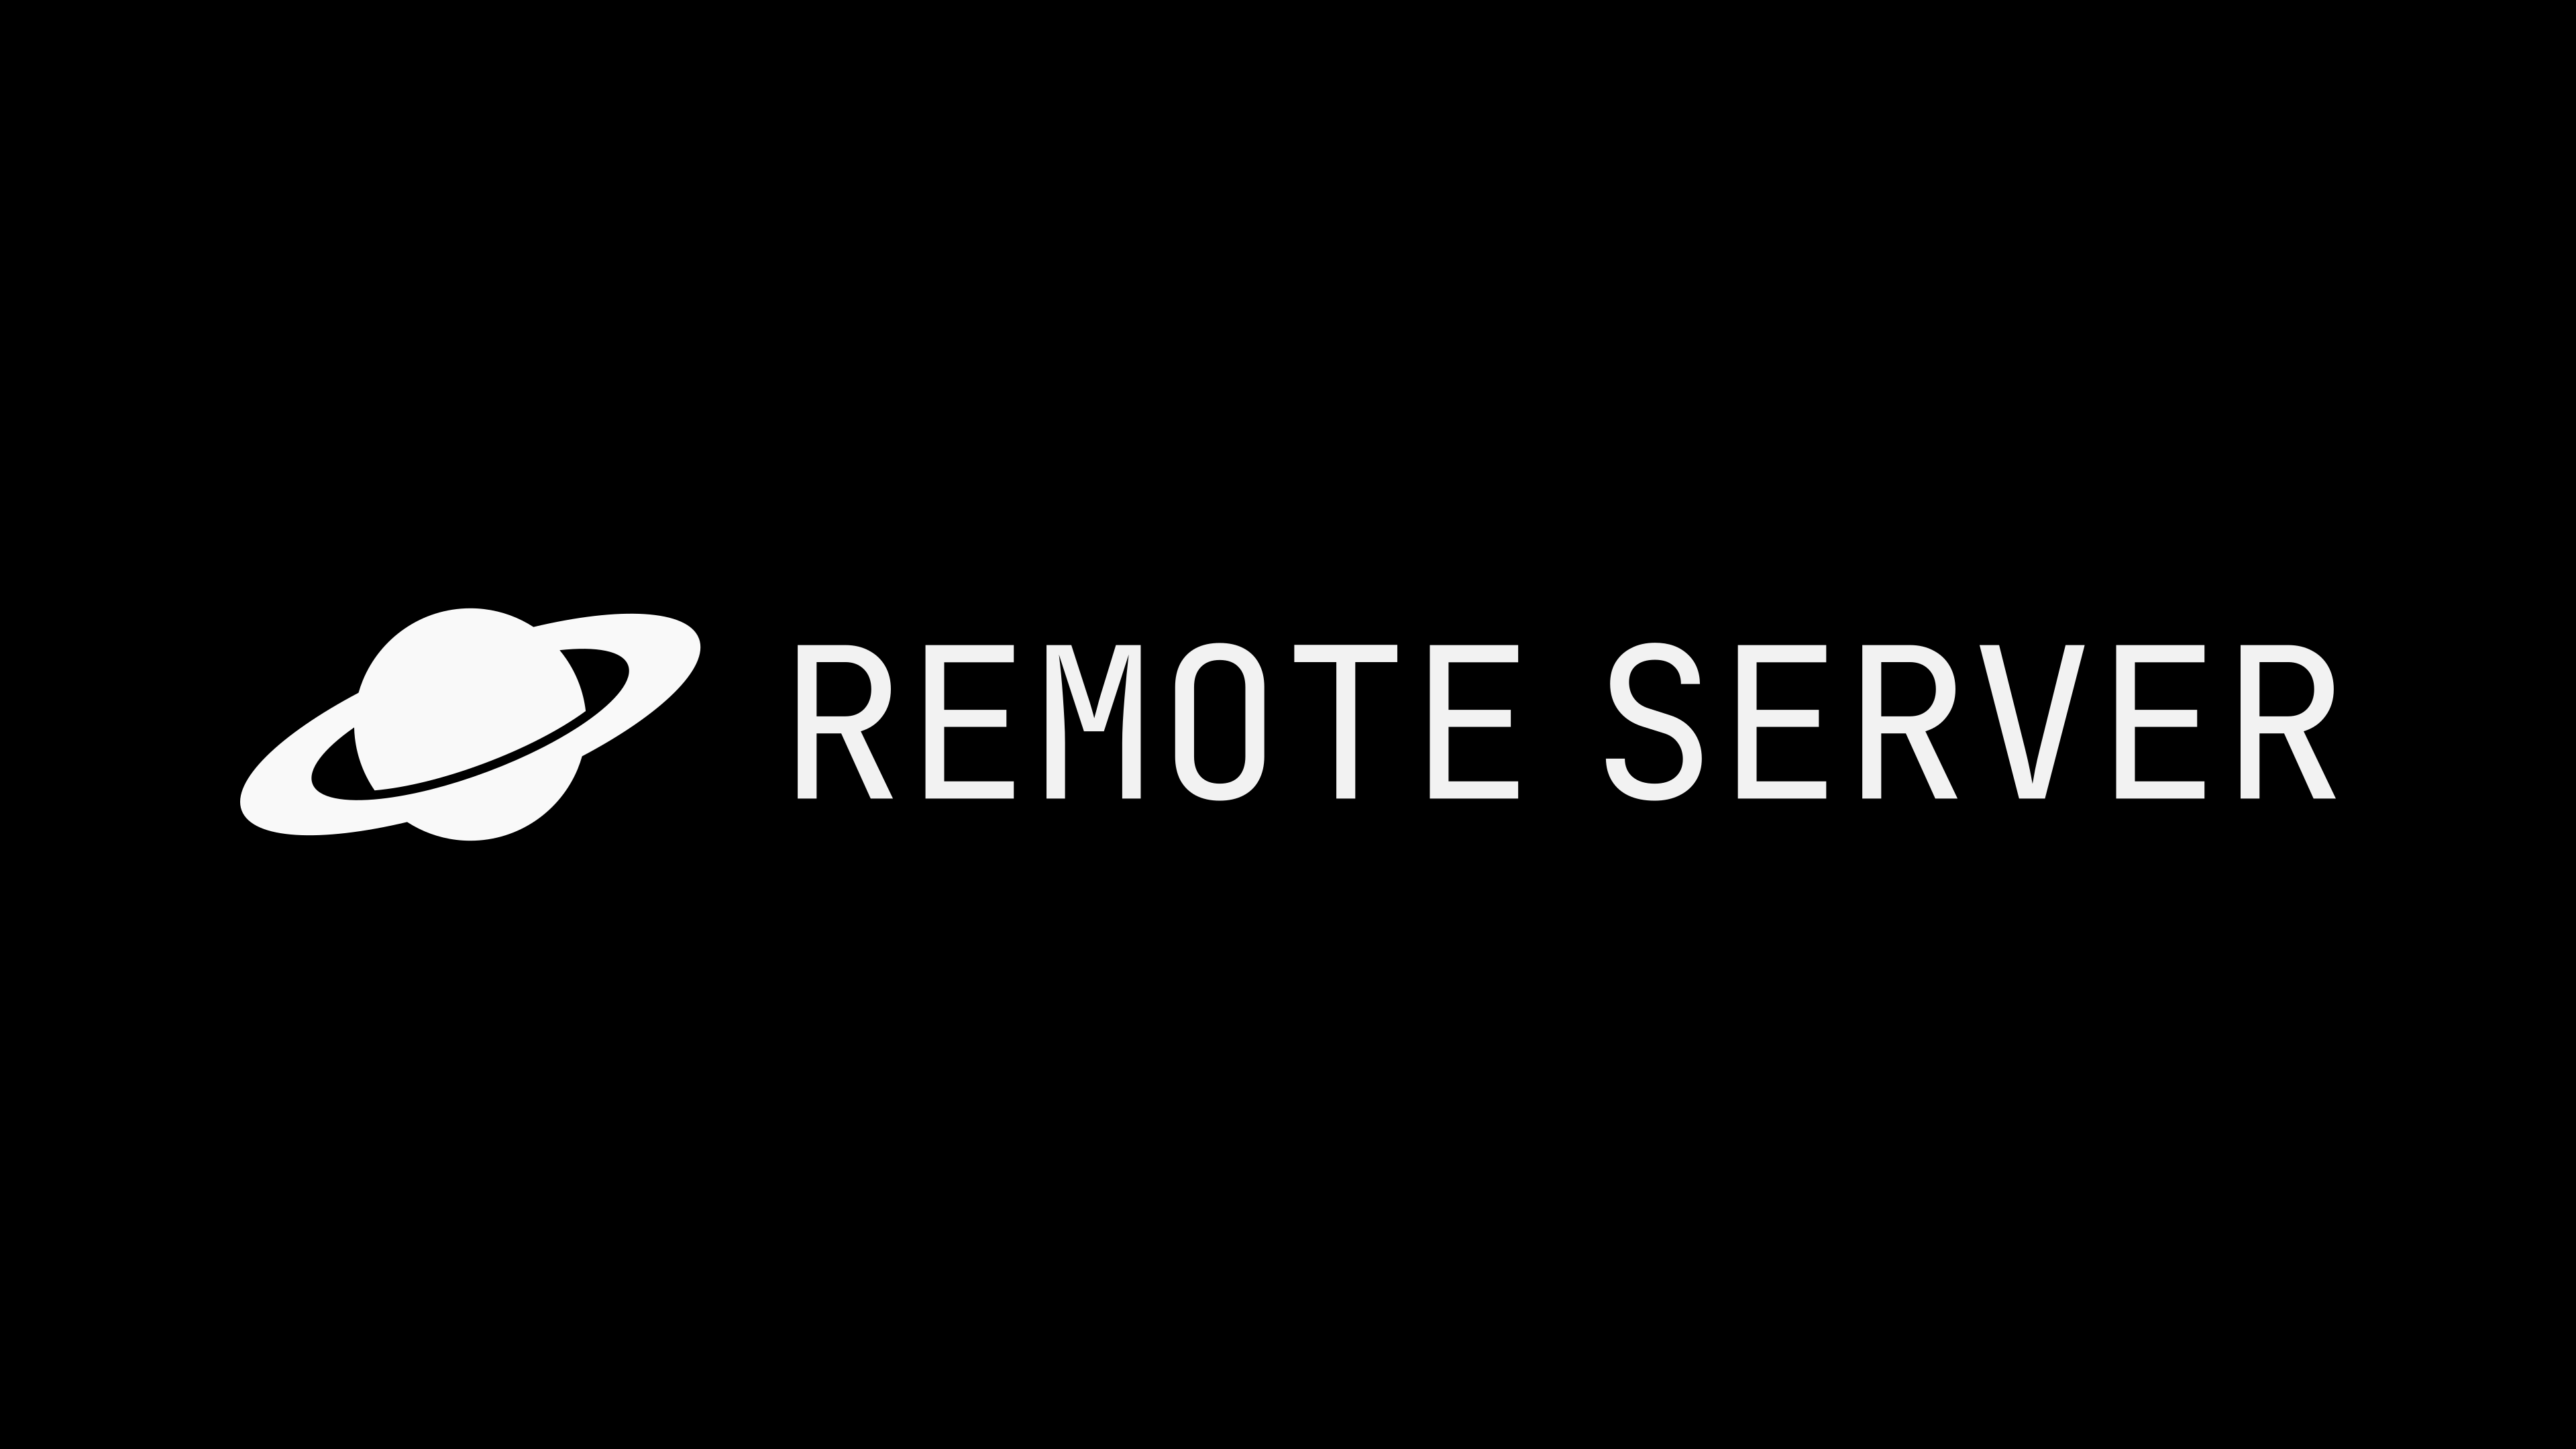 Saturn Remote Mouse Server